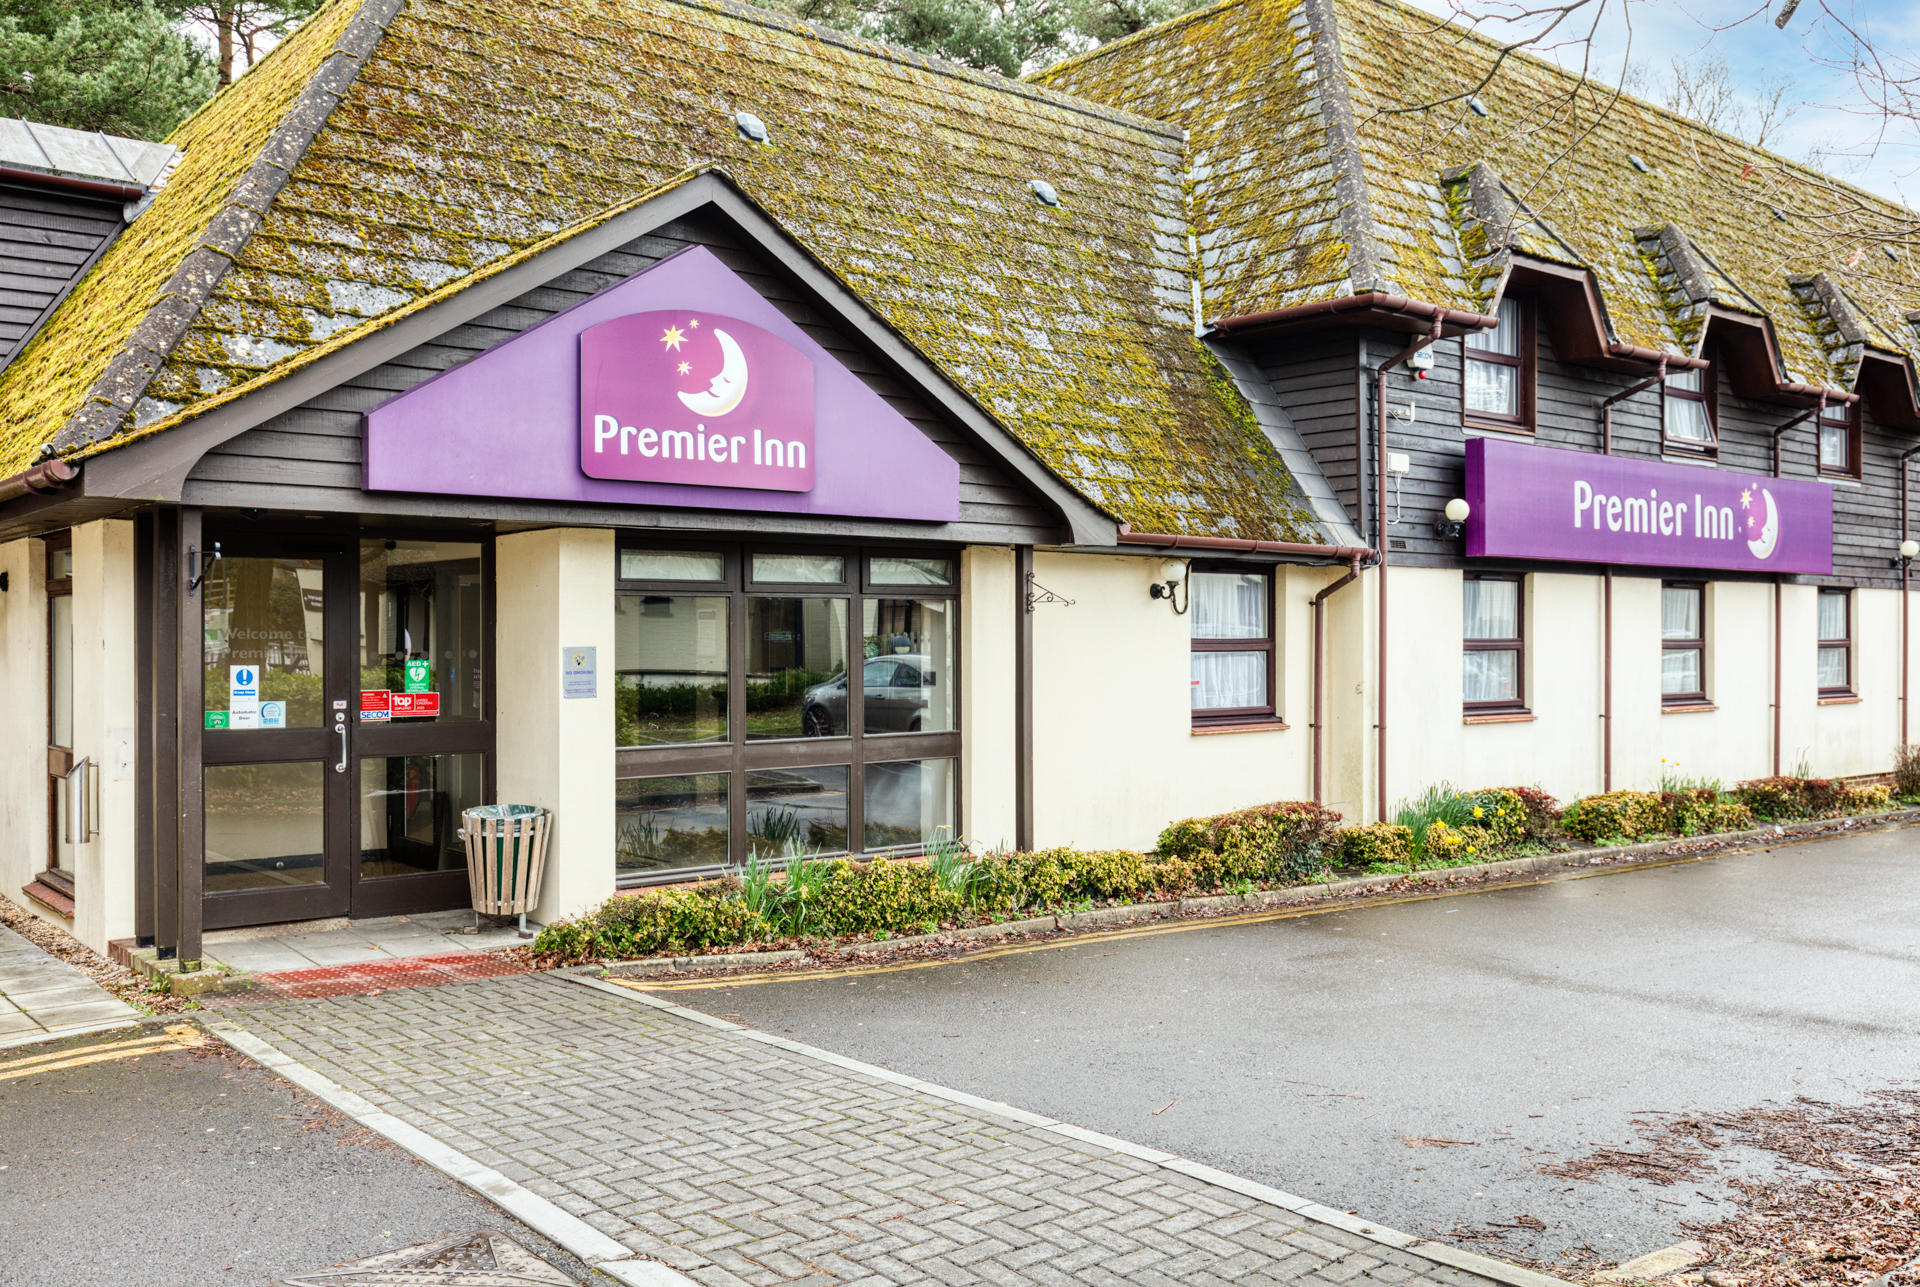 Premier Inn Bournemouth Ferndown hotel Ferndown 03337 773928